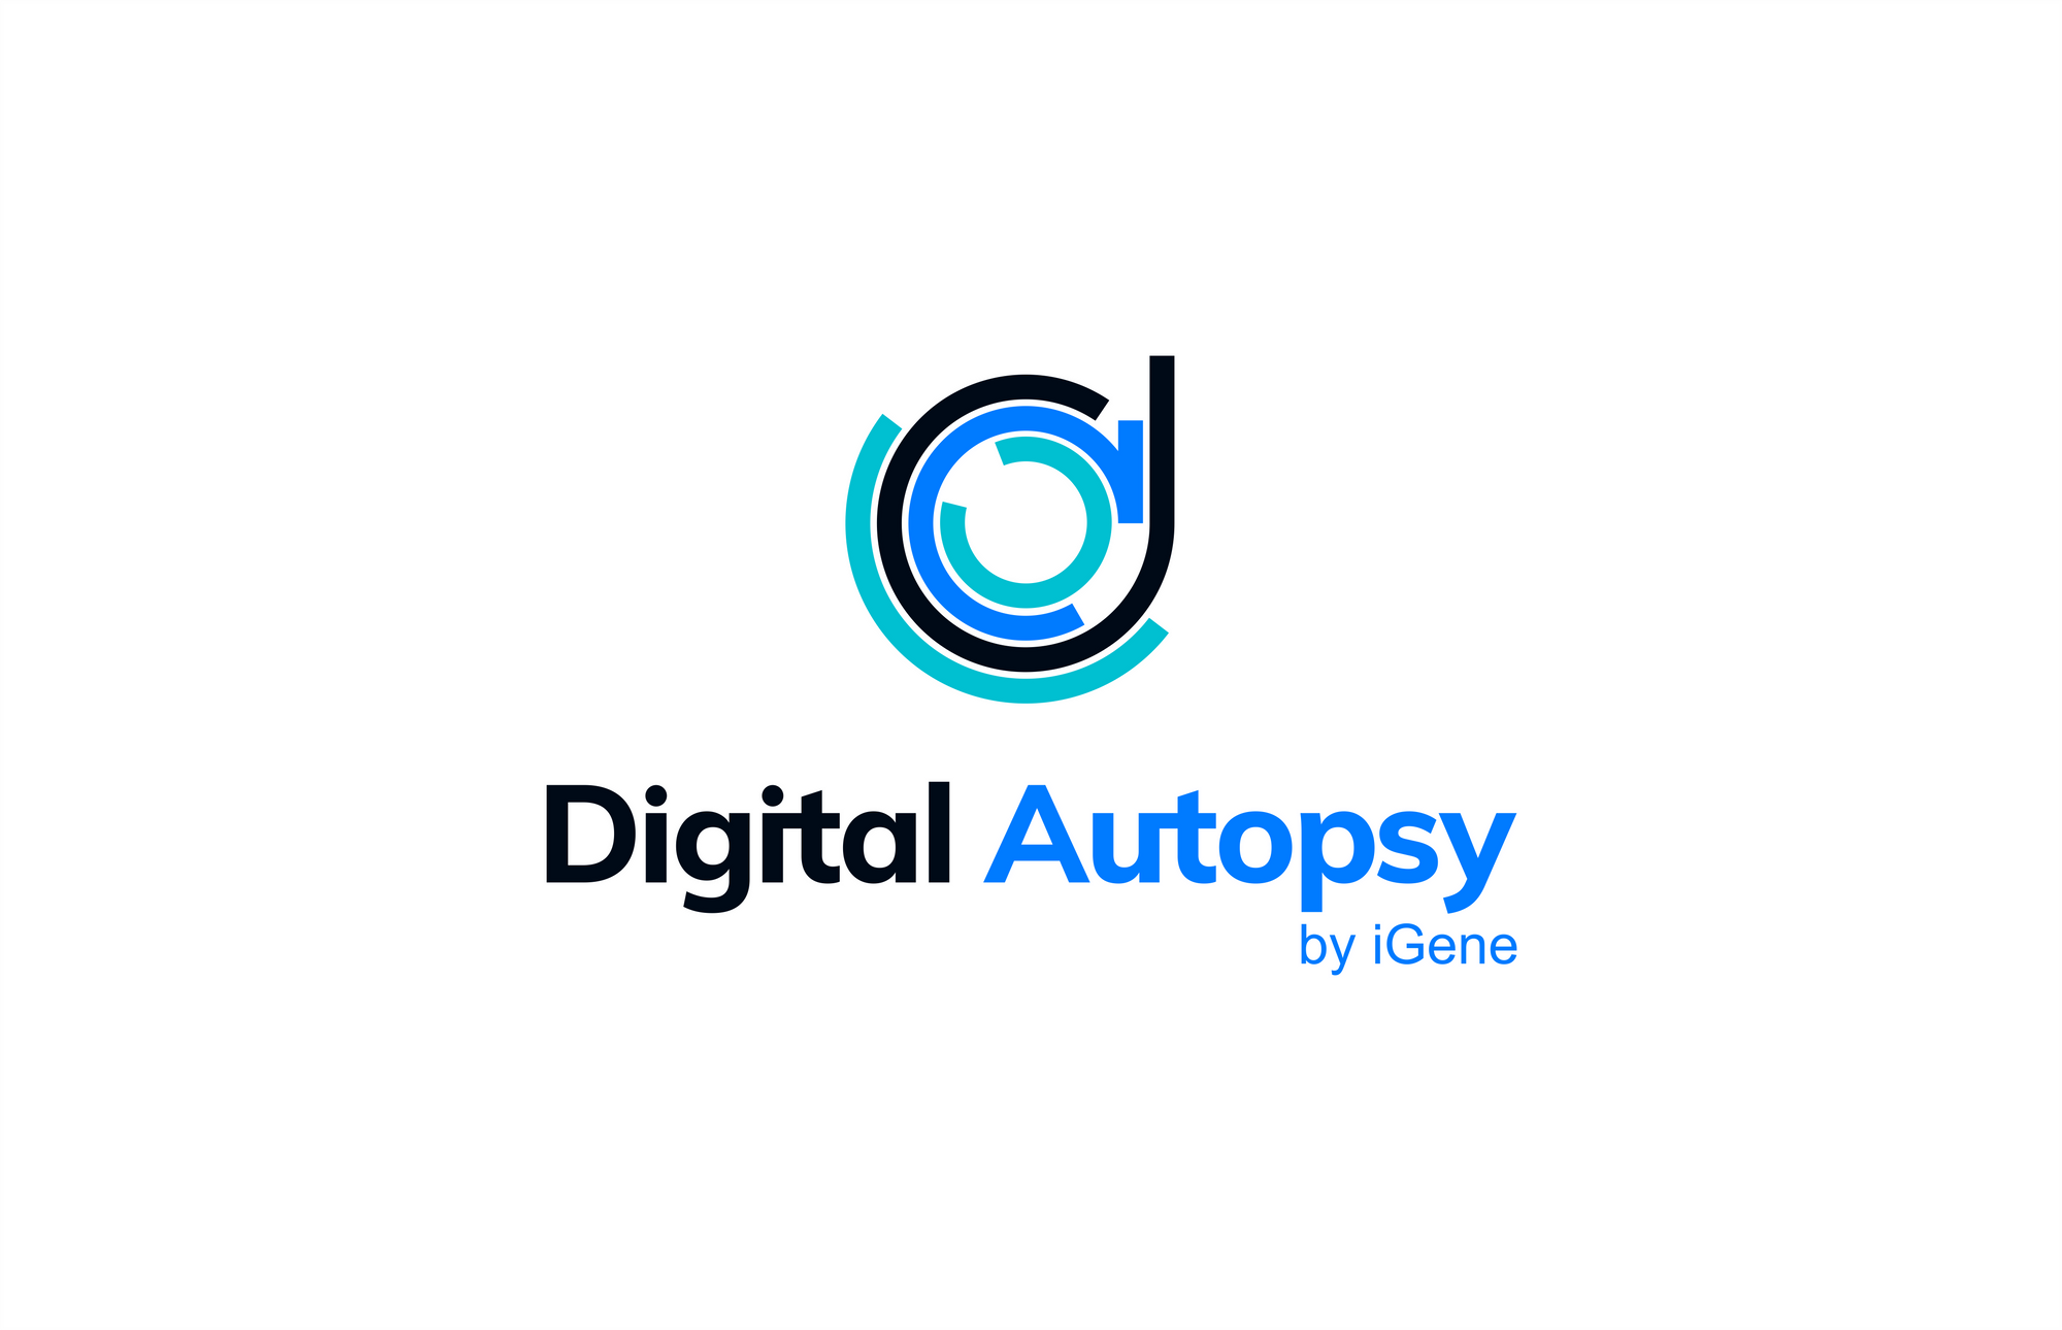 Digital Autopsy